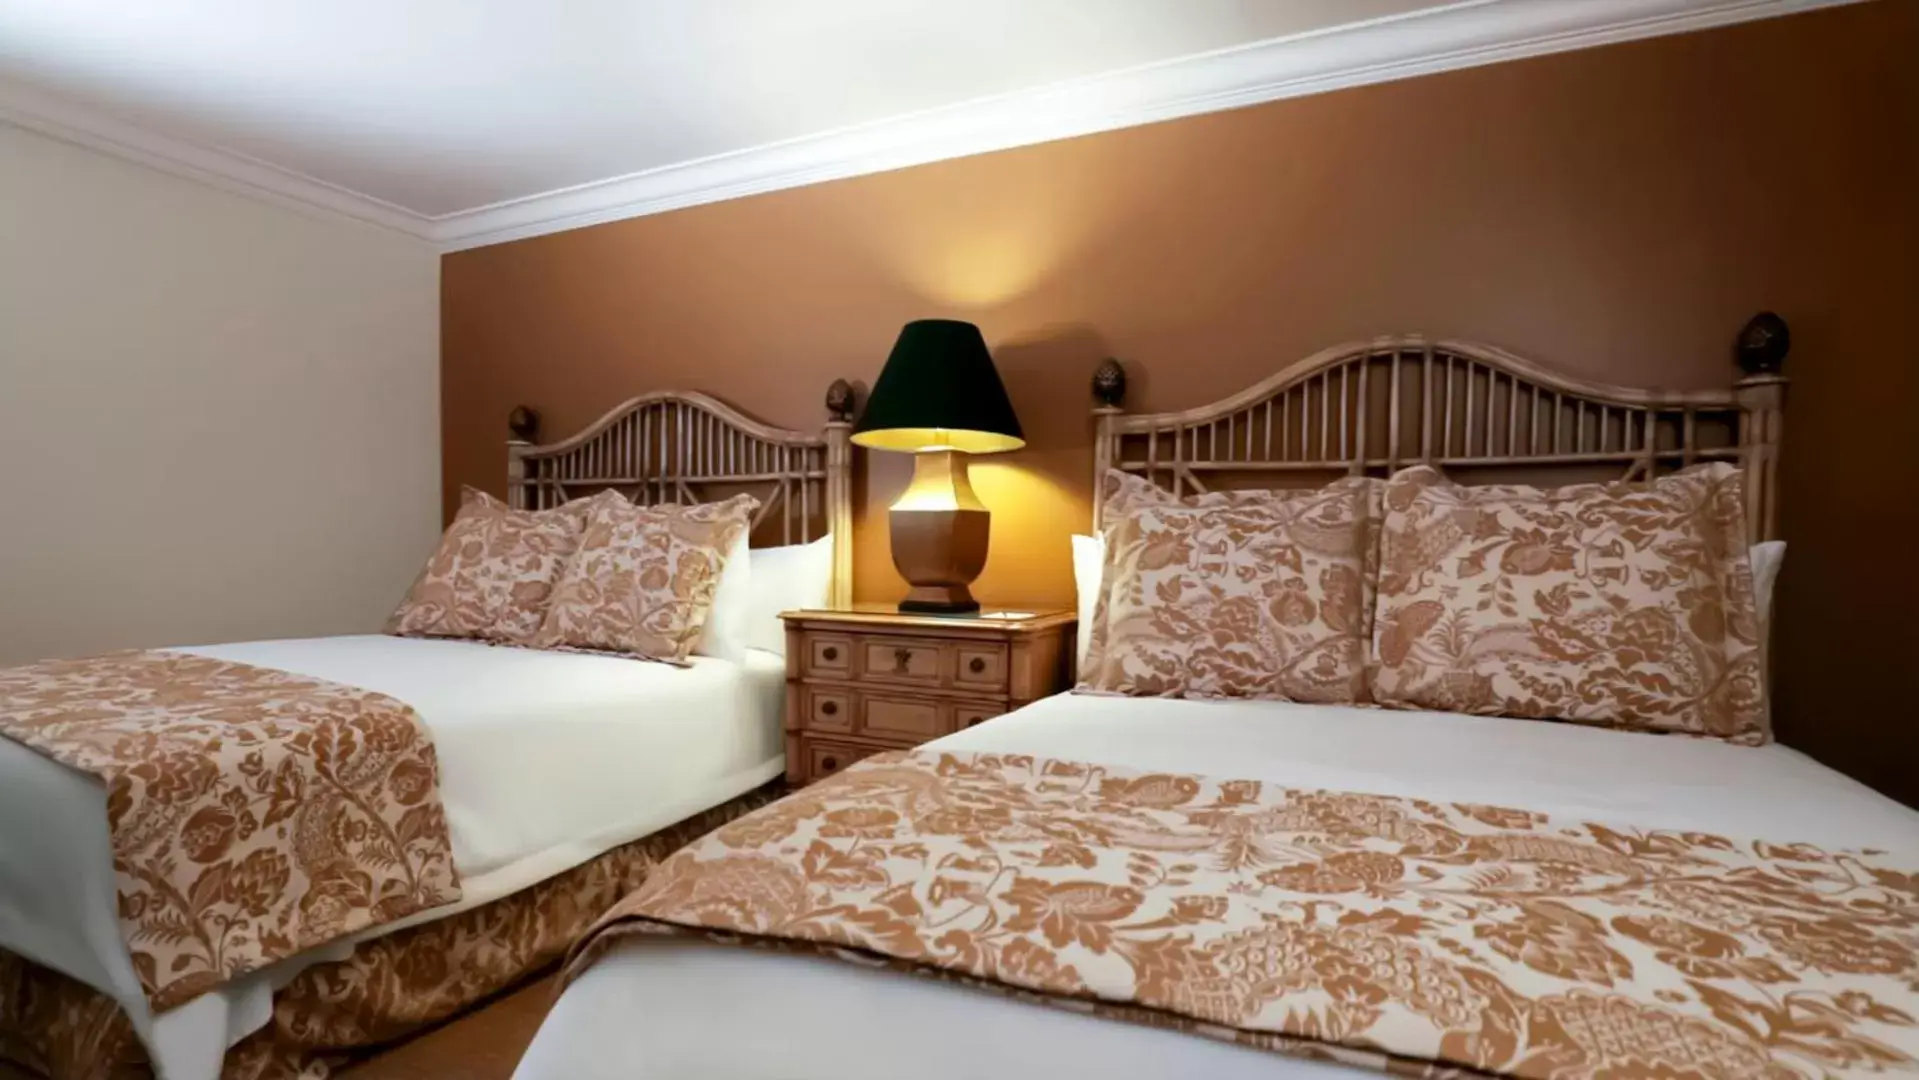 Standard Queen Room with Two Queen Beds in Santa Barbara Inn